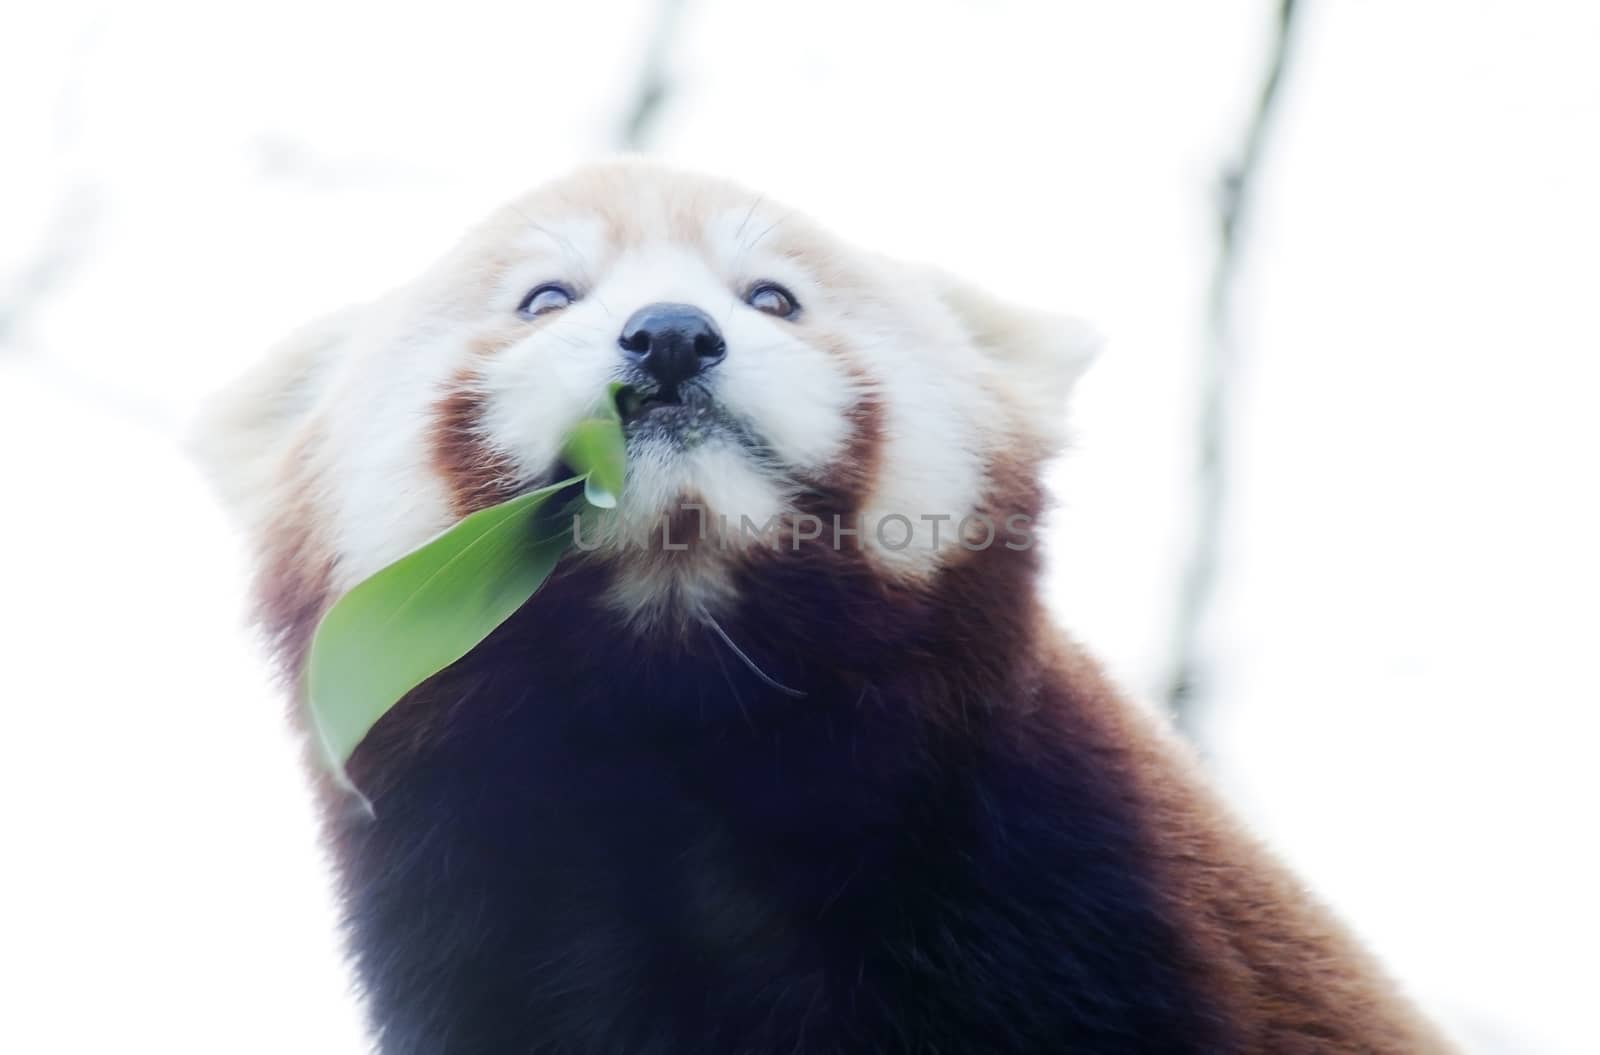 Cute red panda enjoys eating bamboo